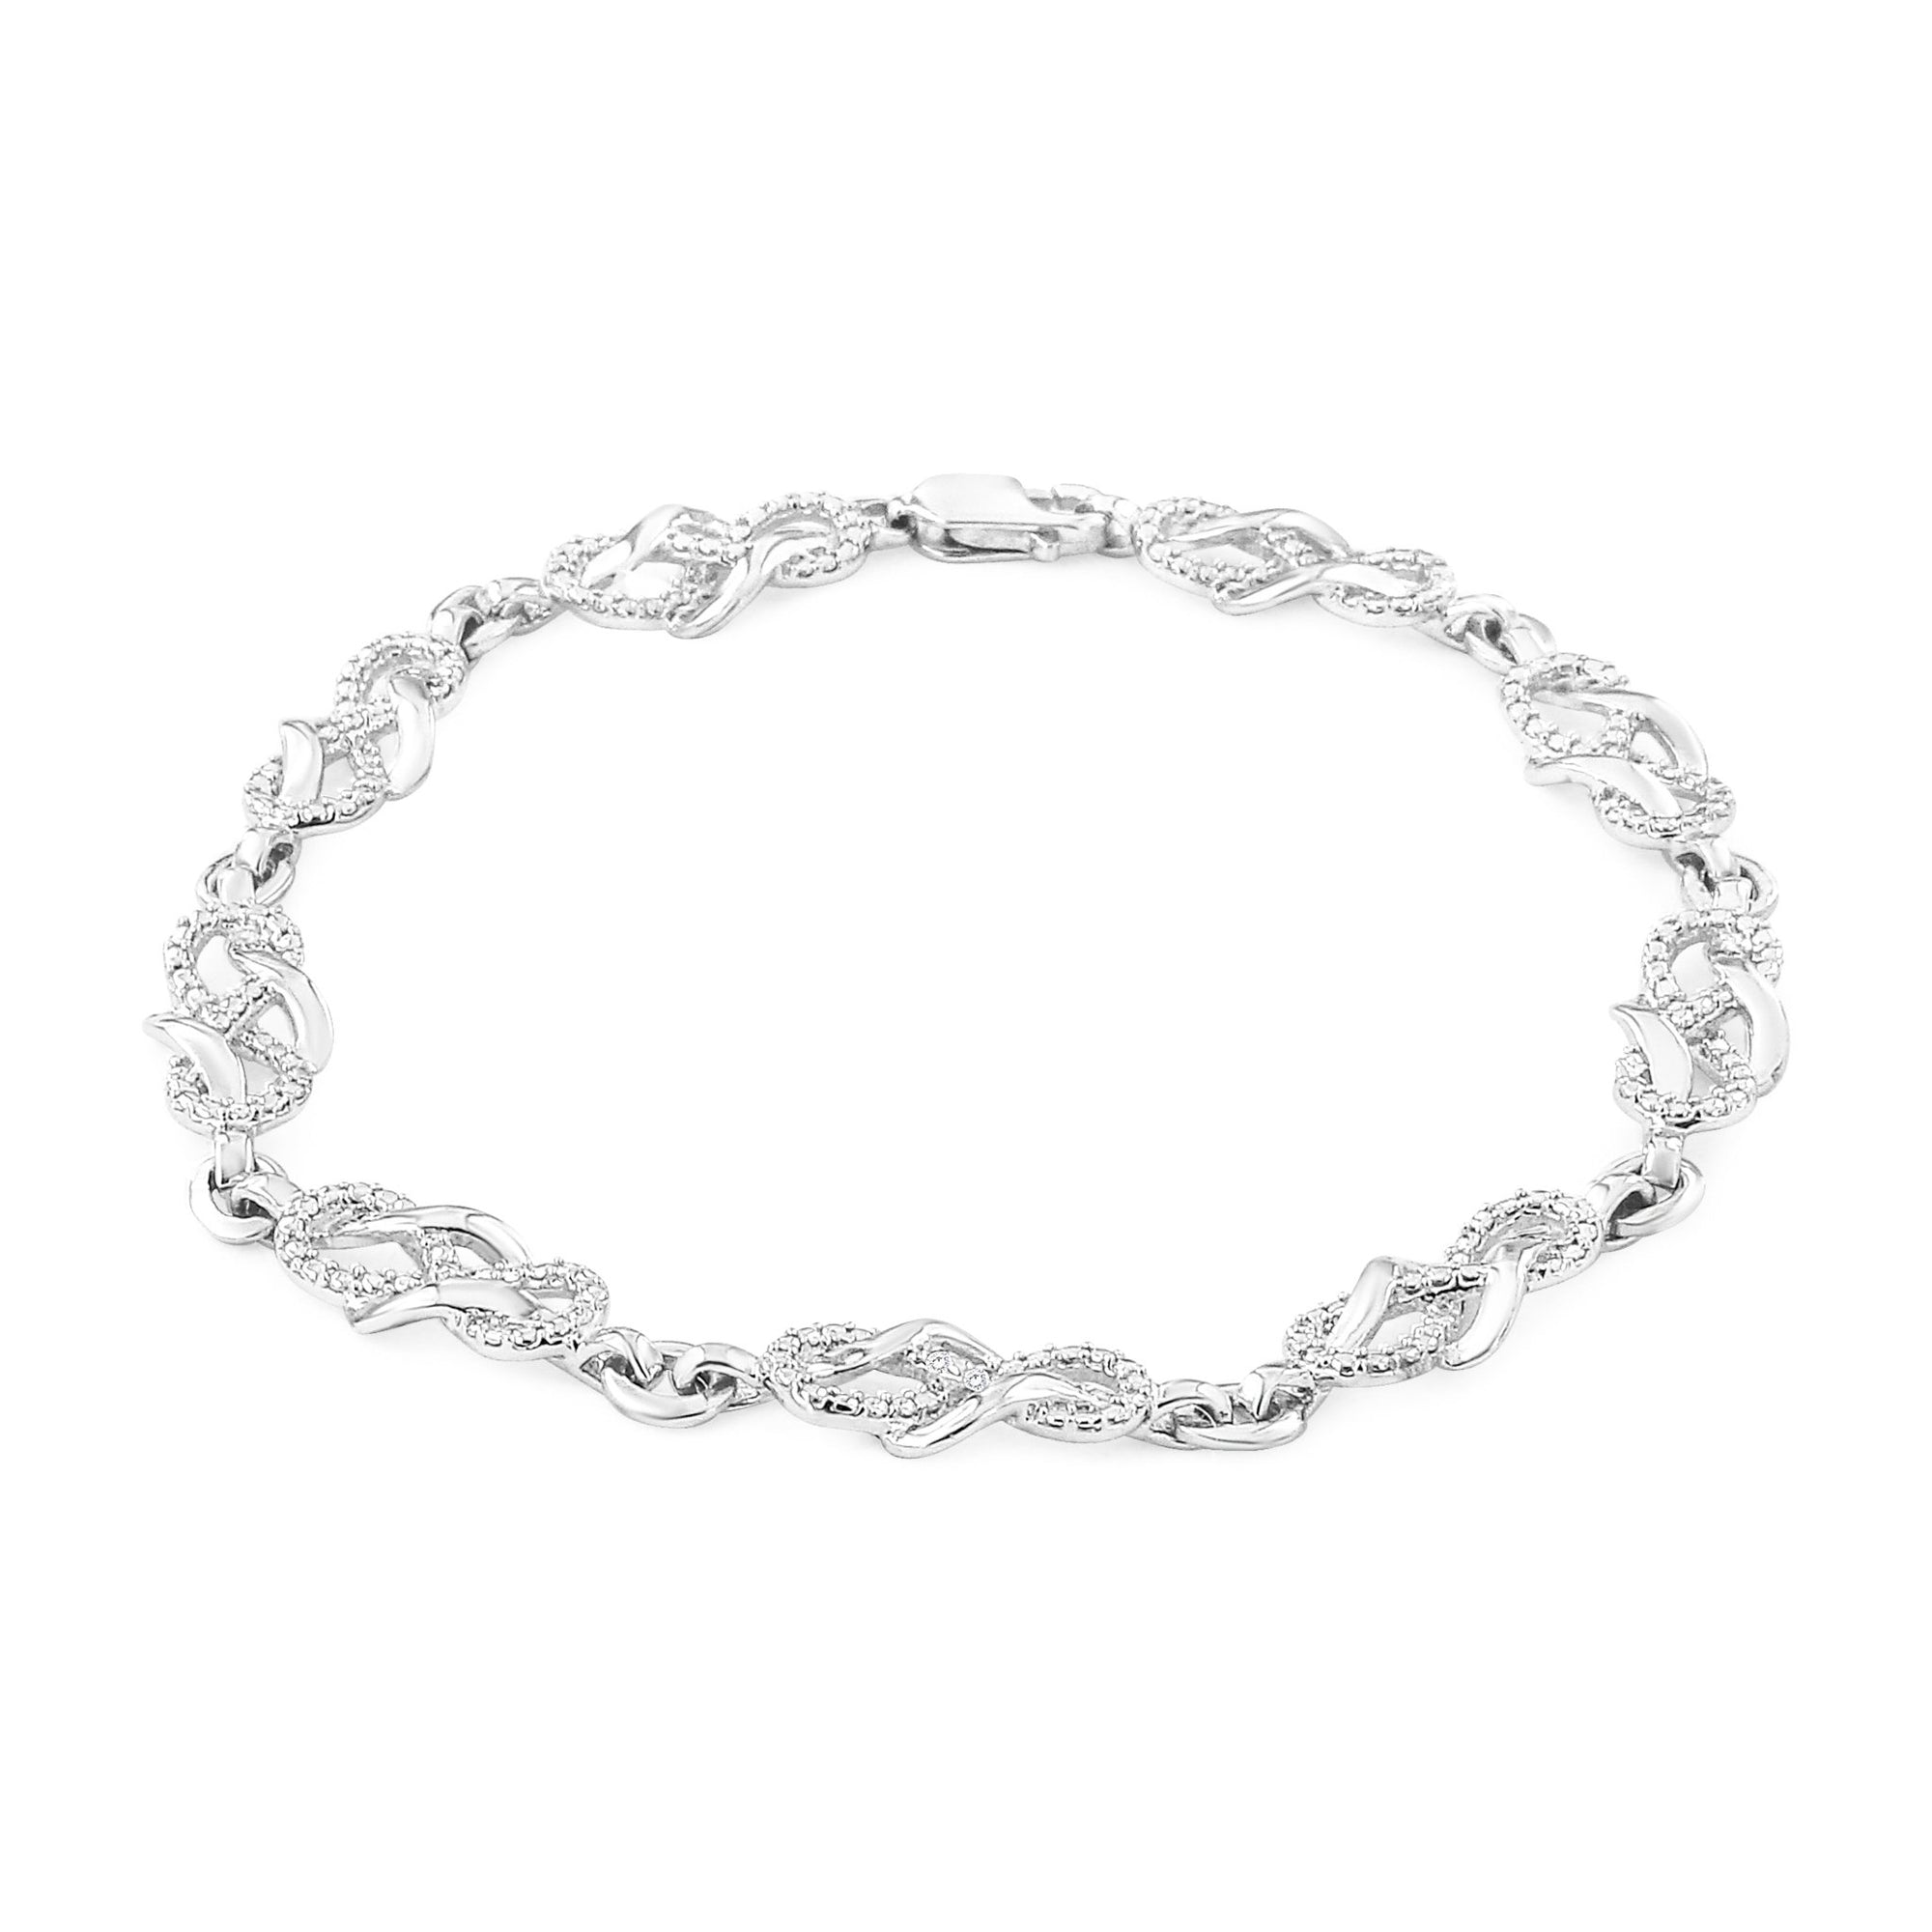 .925 Sterling Silver Prong Set Diamond Accent Infinity Weave Link 7.25" Bracelet (I-J Color, I3 Clarity) - LinkagejewelrydesignLinkagejewelrydesign